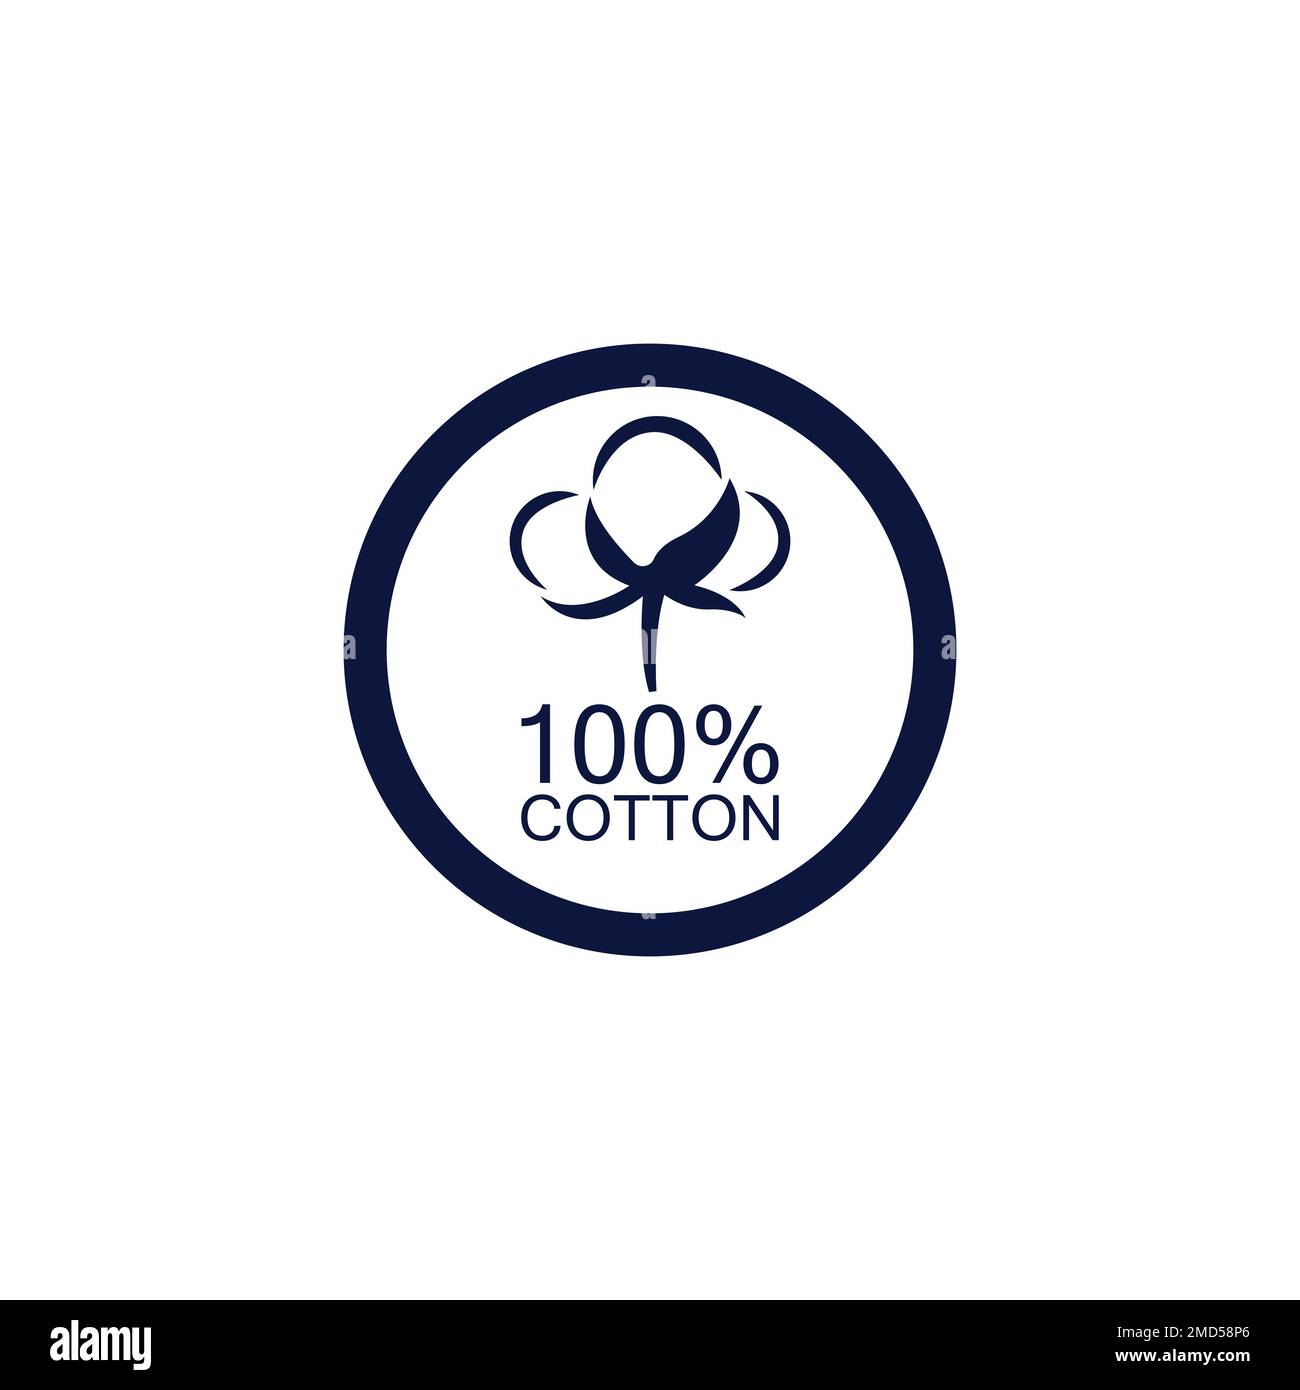 100% cotton icon.Natural organic cotton, pure cotton vector labels